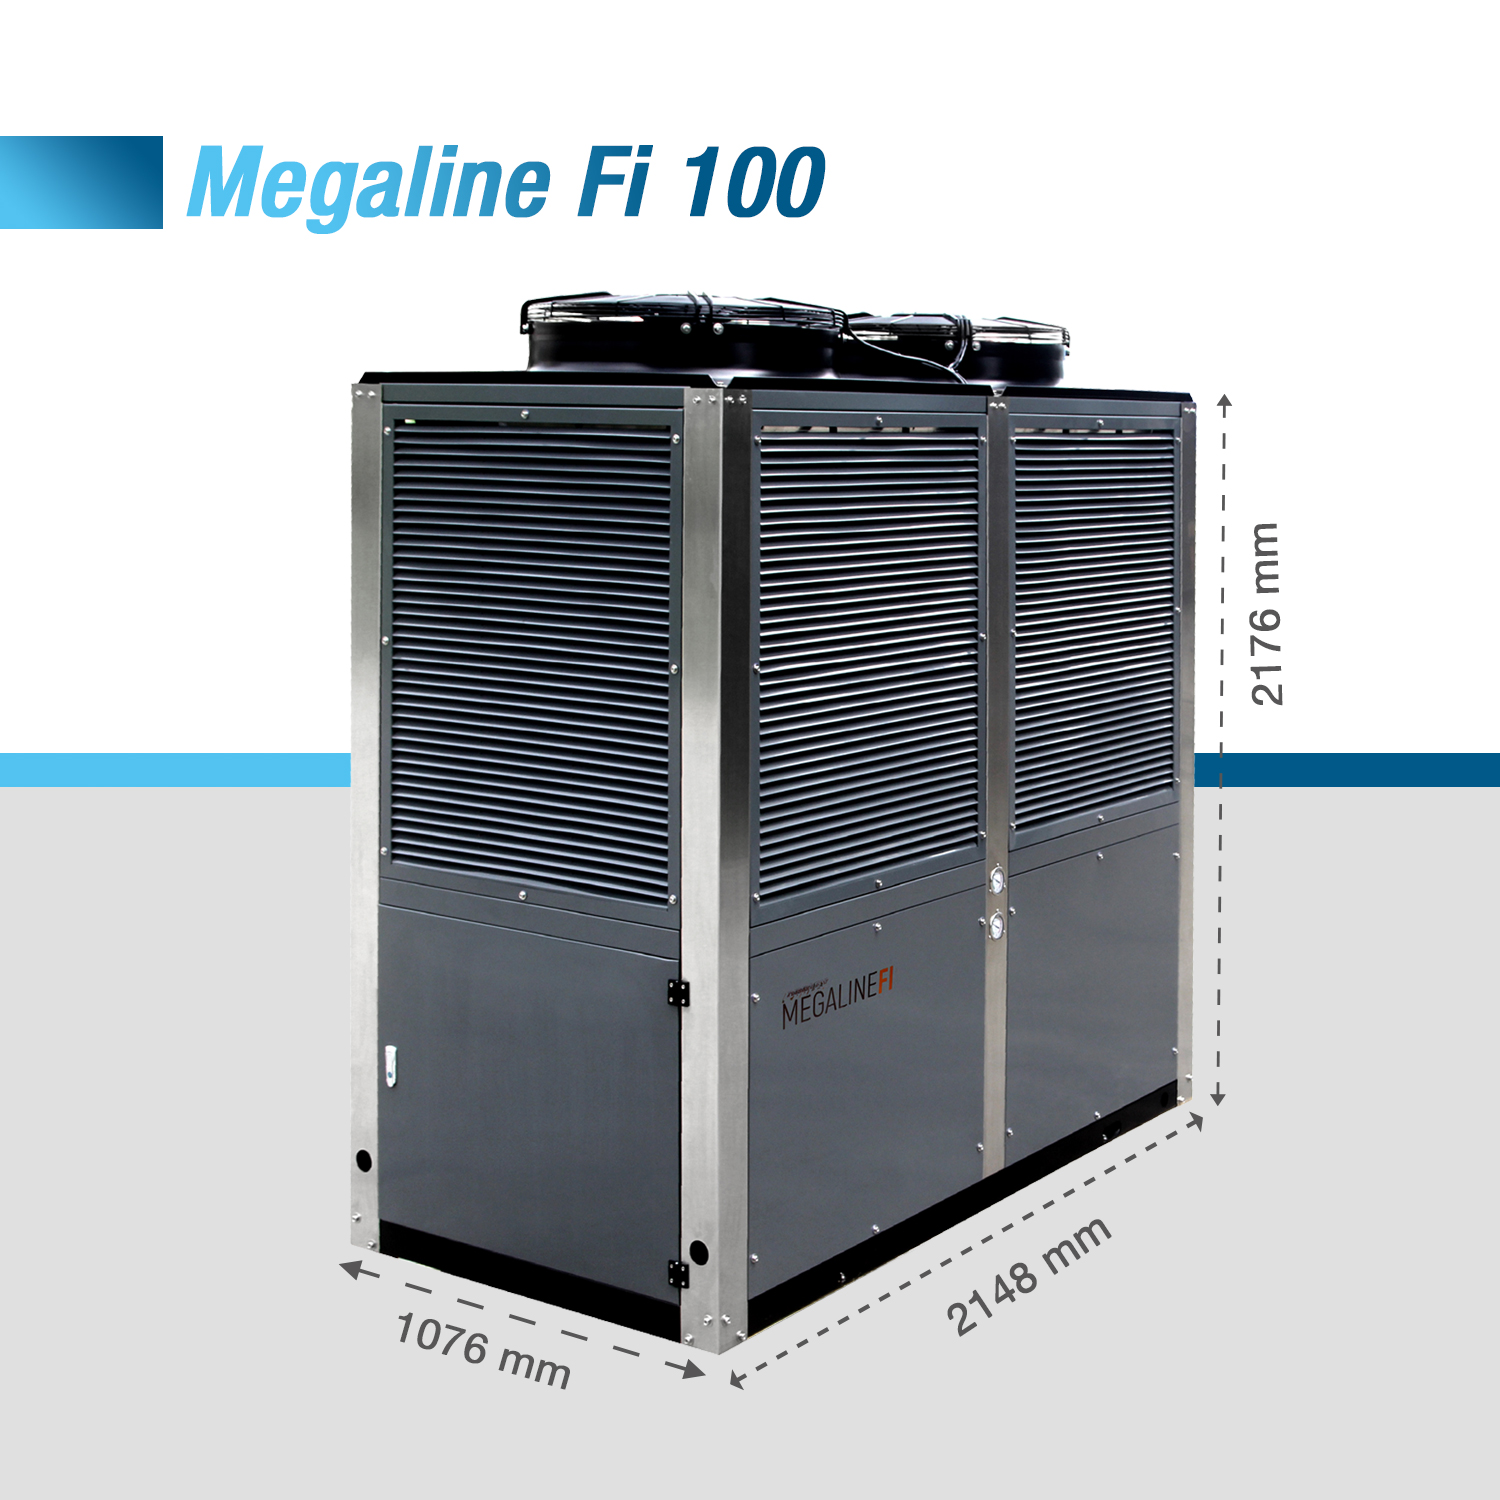 Megaline Fi 100 dimensions